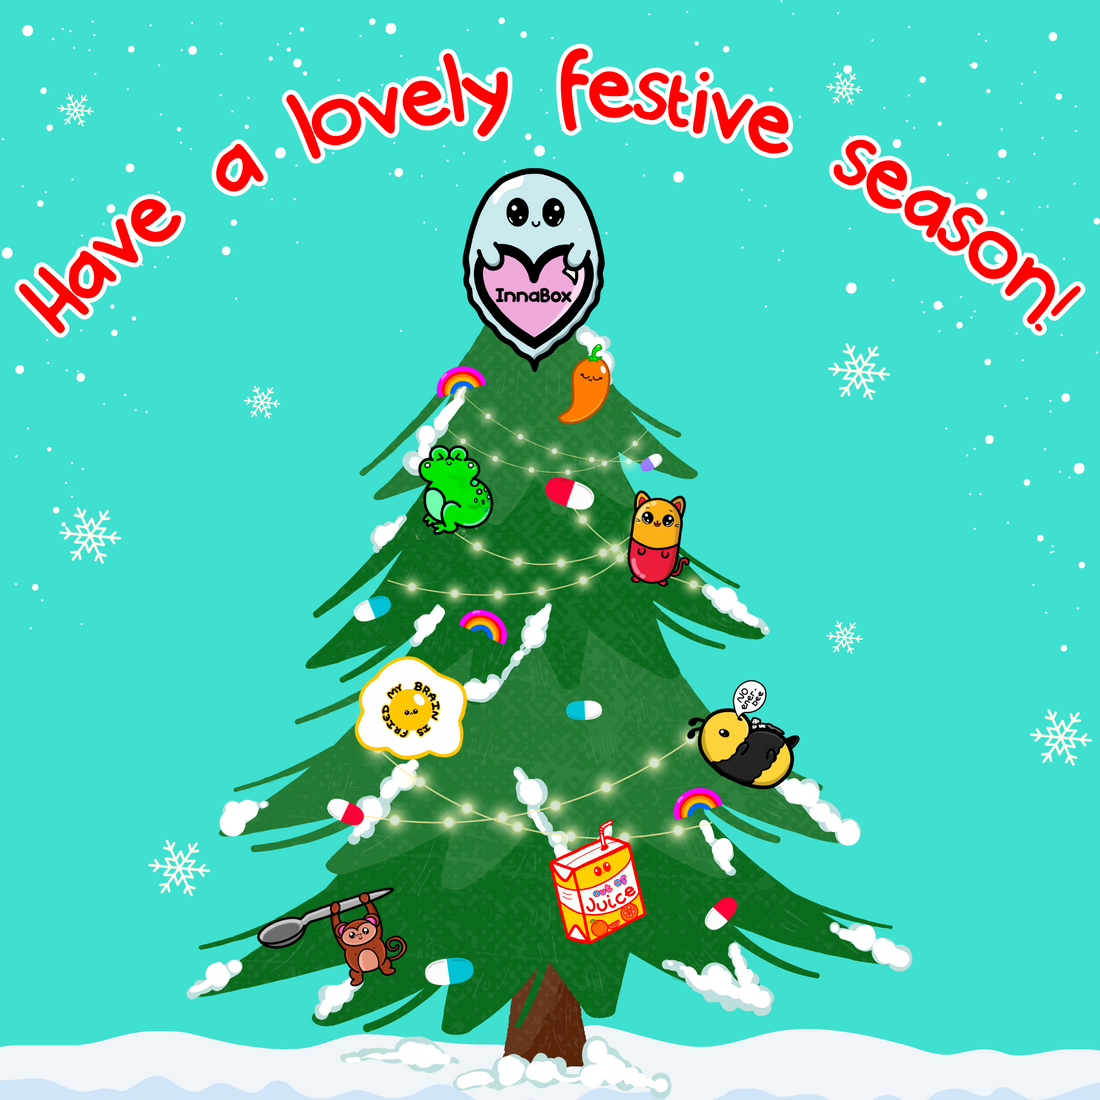 Have a Lovely Festive Season! 🎄✨